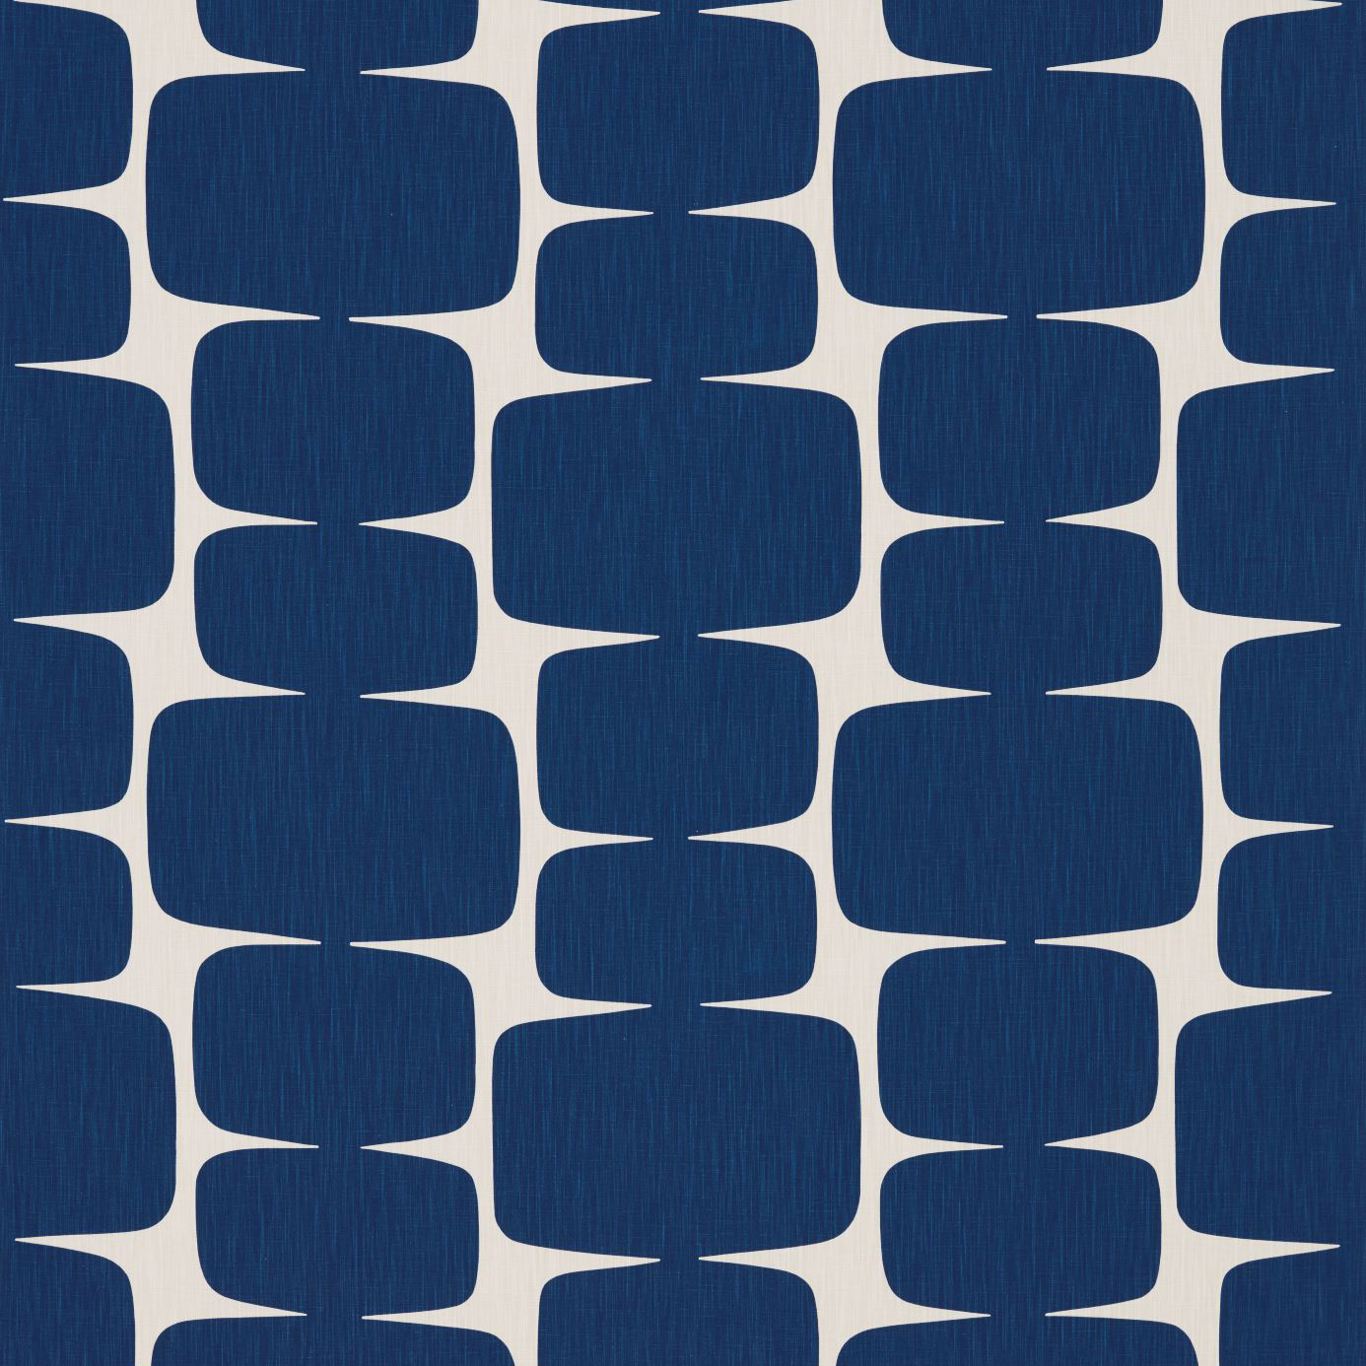 Lohko Fabric by Scion